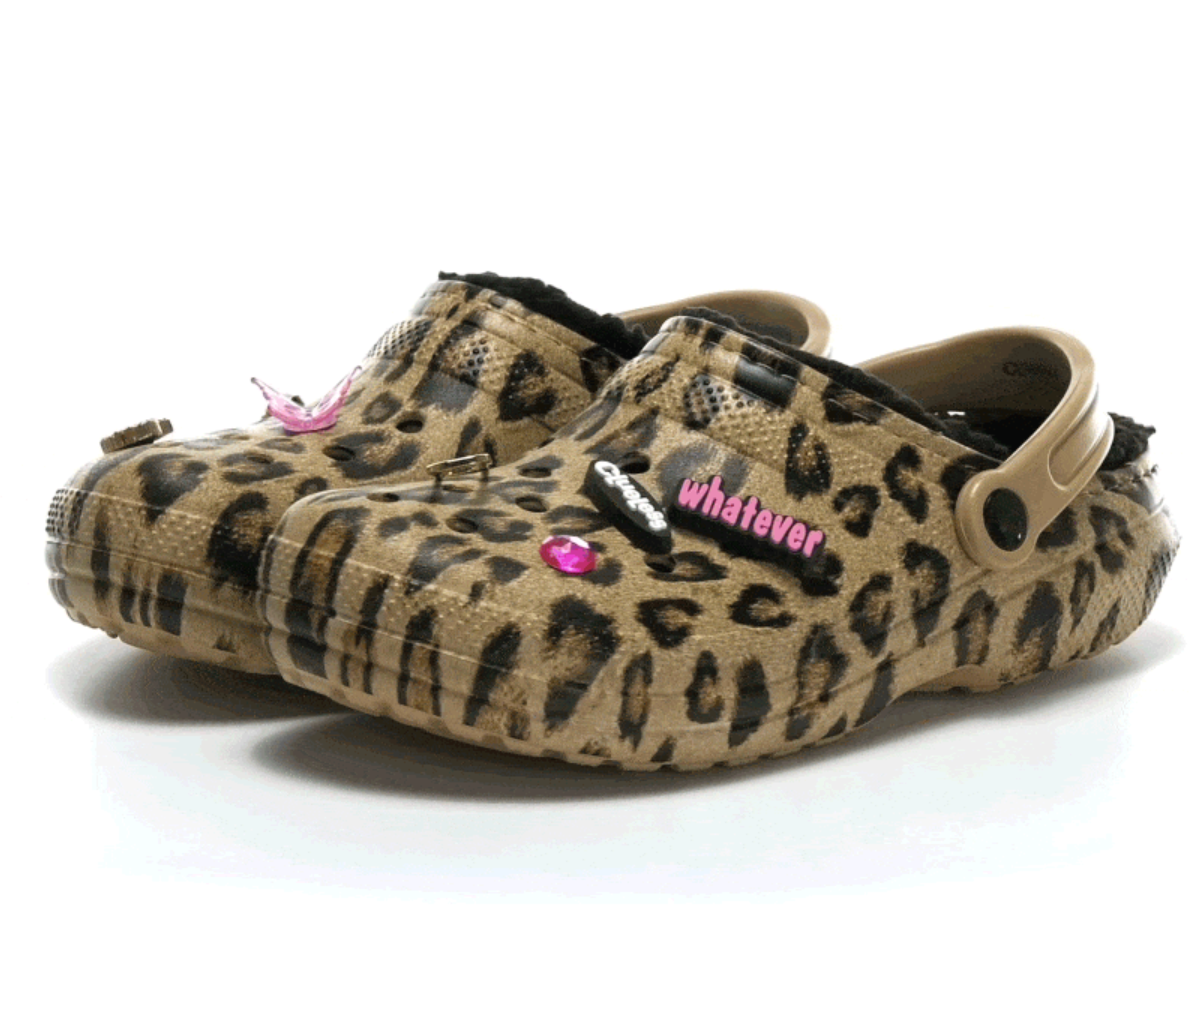 Crocs x 'Clueless' The Amber Shoe